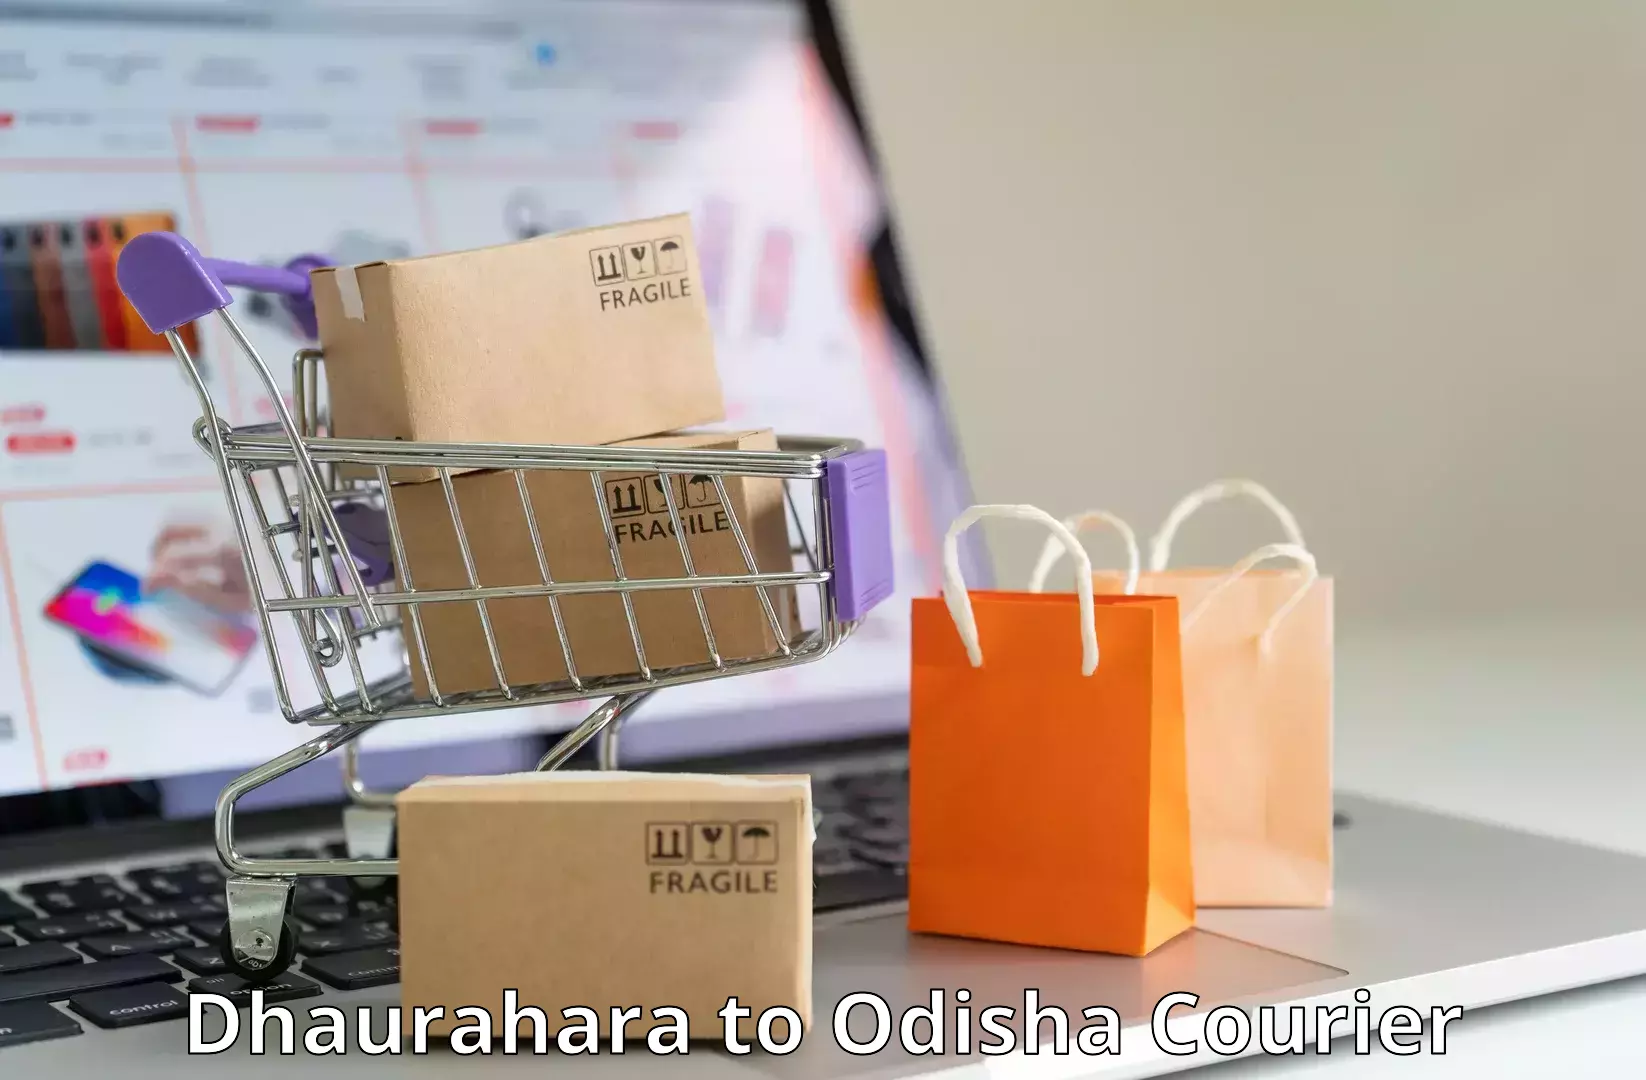 Courier membership Dhaurahara to Dhamanagar